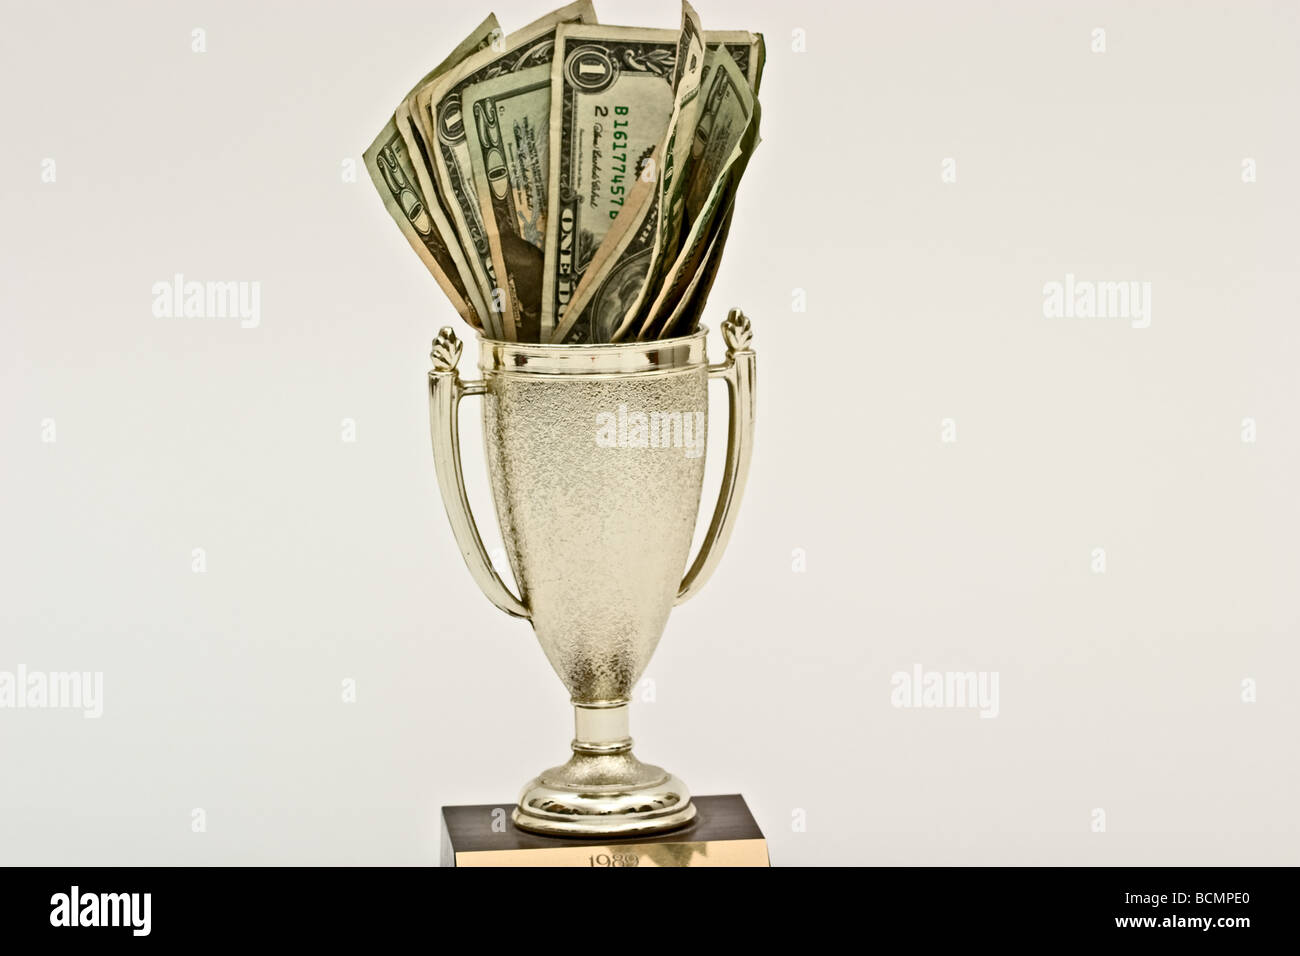 Cash inside a trophy cup Stock Photo